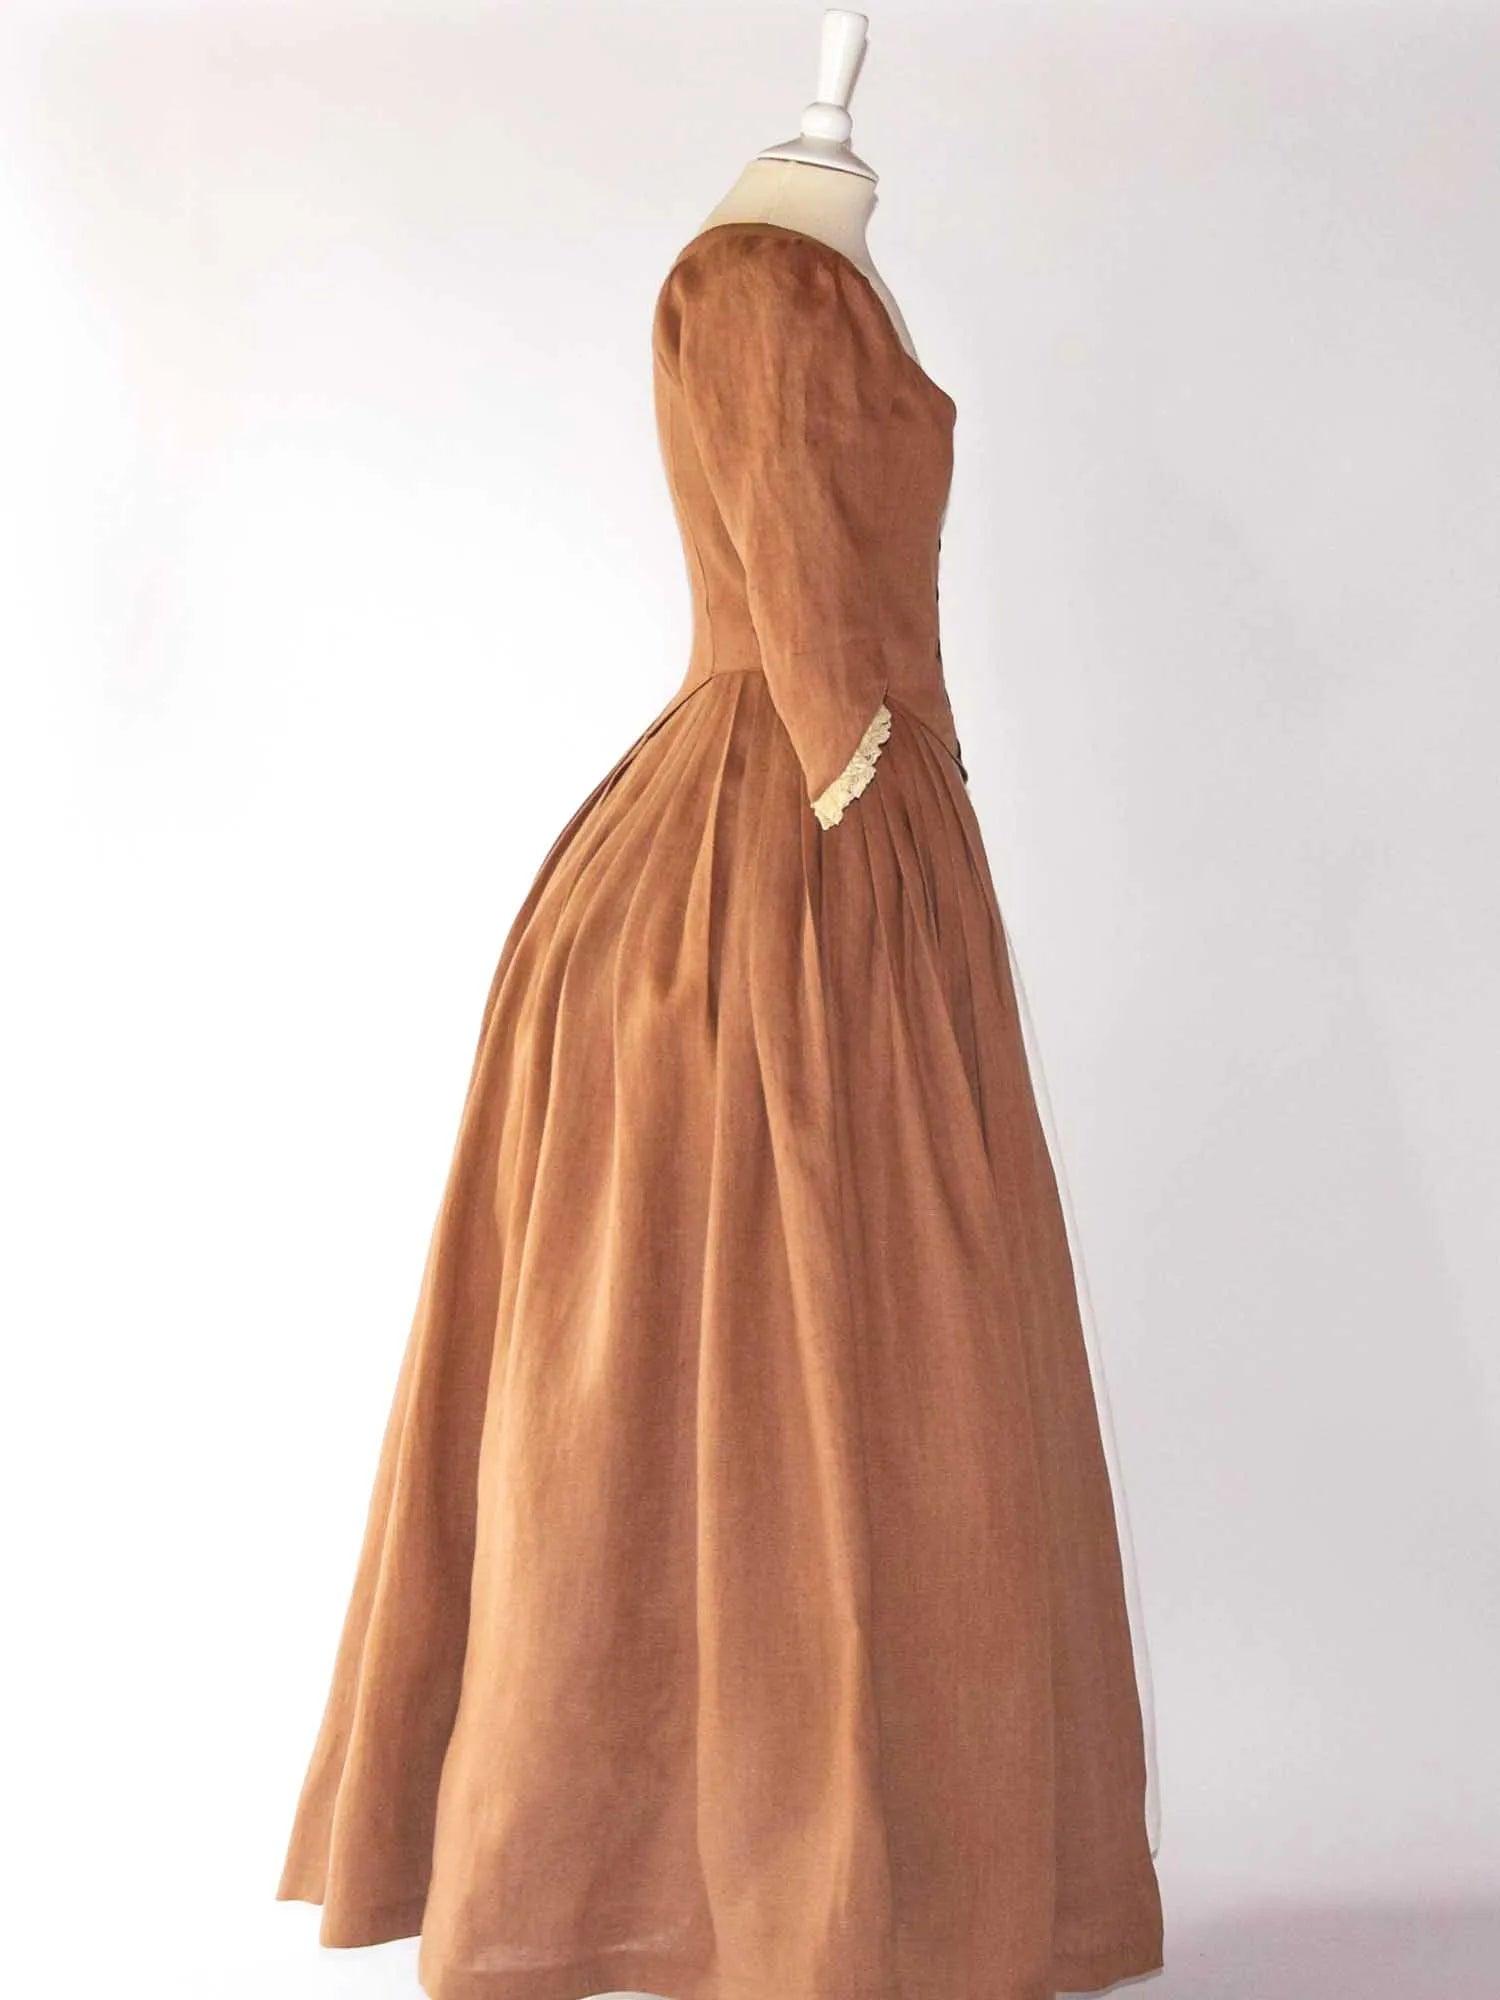 18th Century Overdress in Toffee Linen & Skirt - Atelier Serraspina